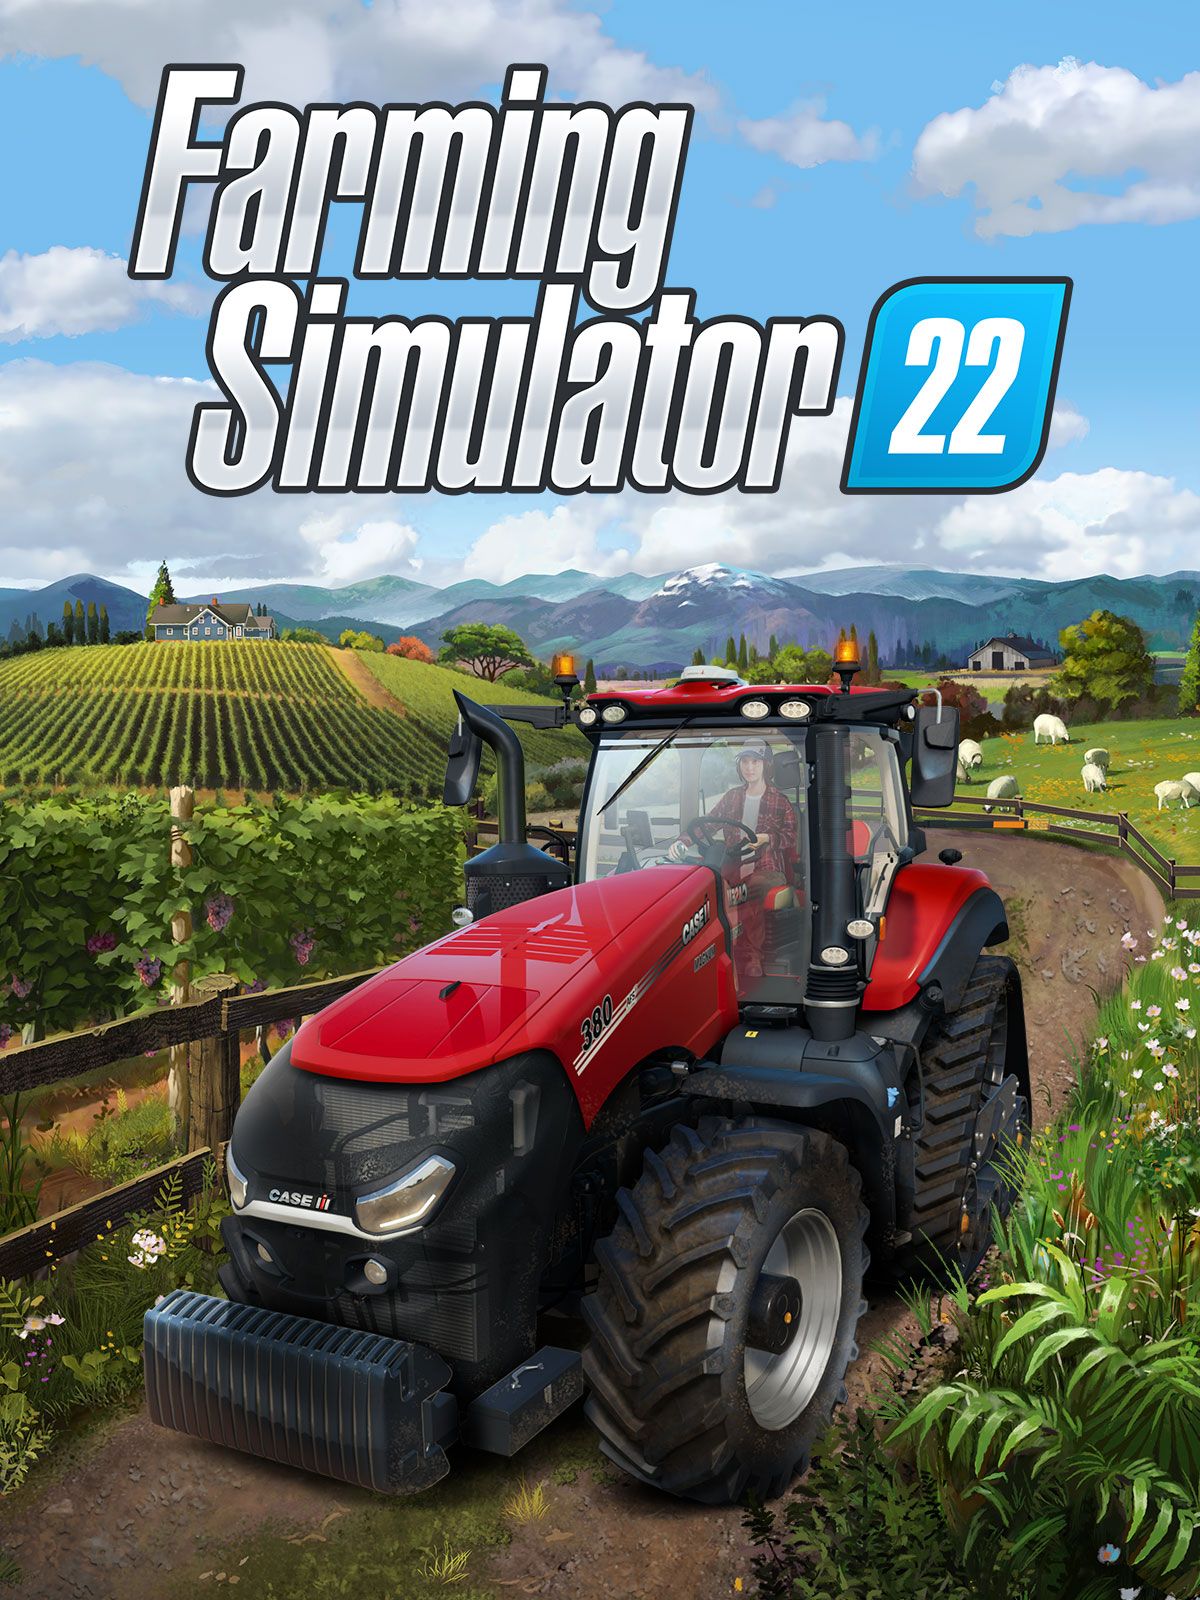 Retrouvez notre TEST : Farming Simulator 22